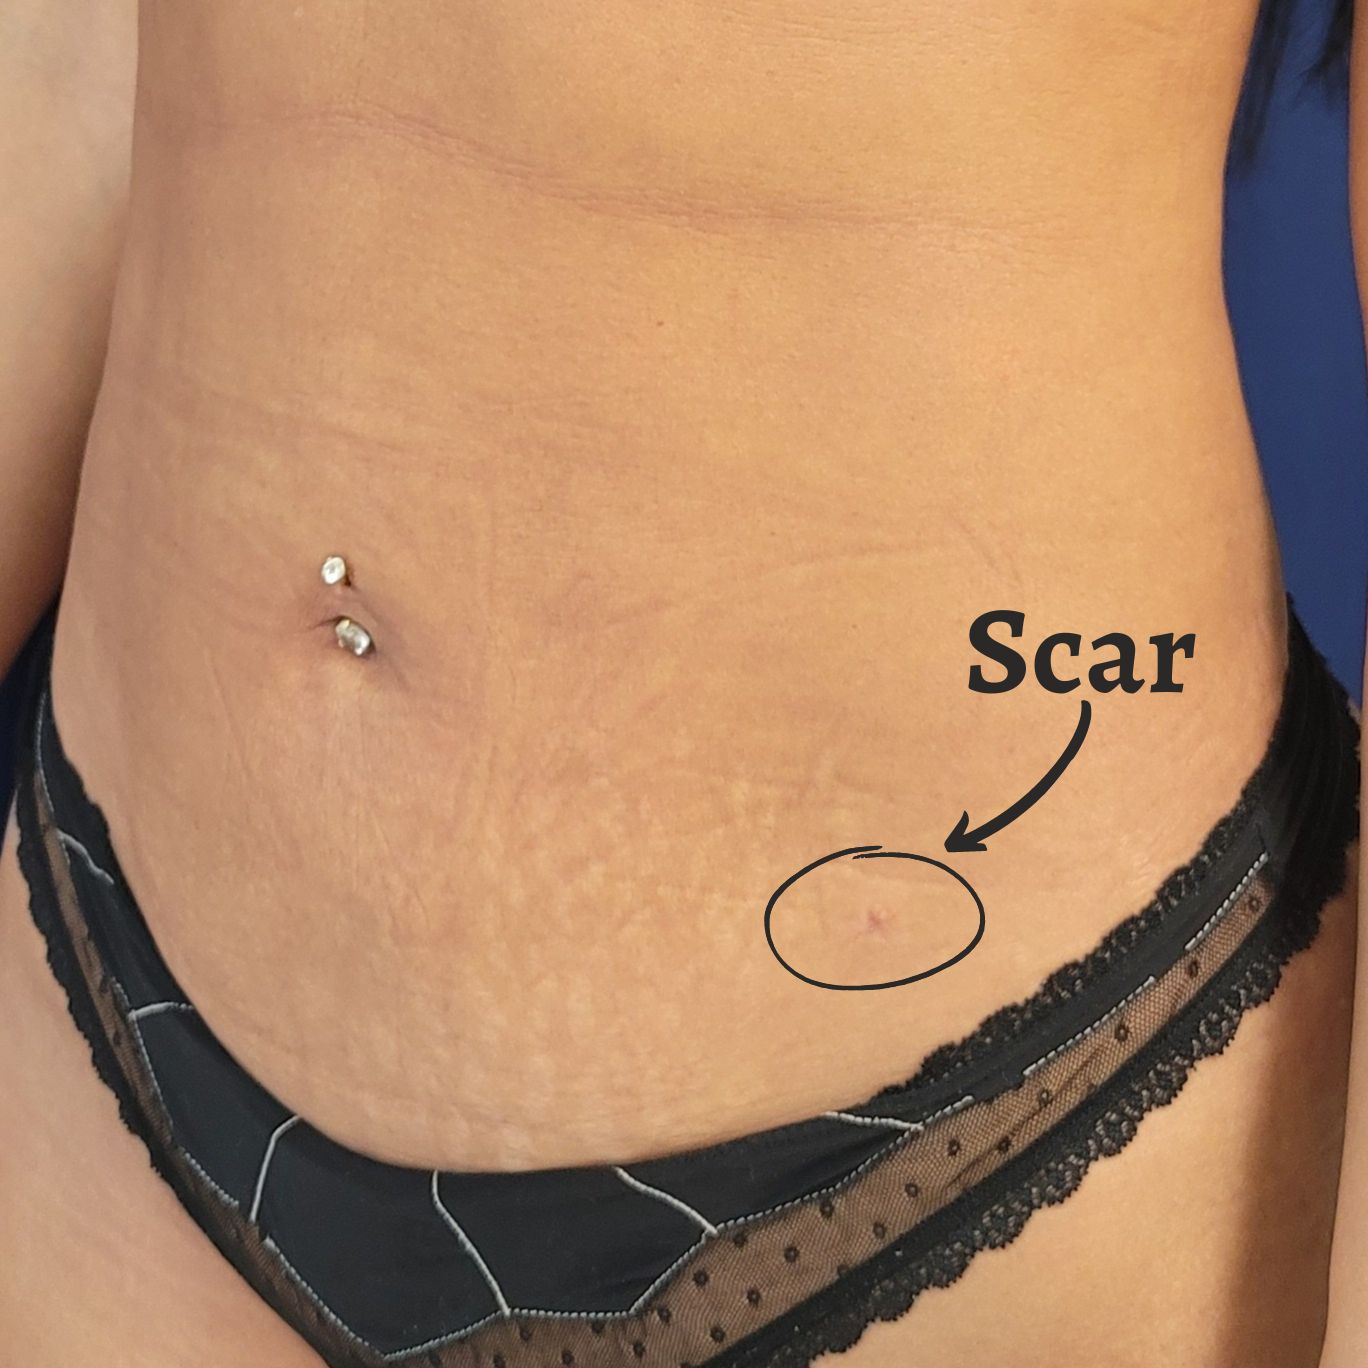 Scar after liposuction procedure